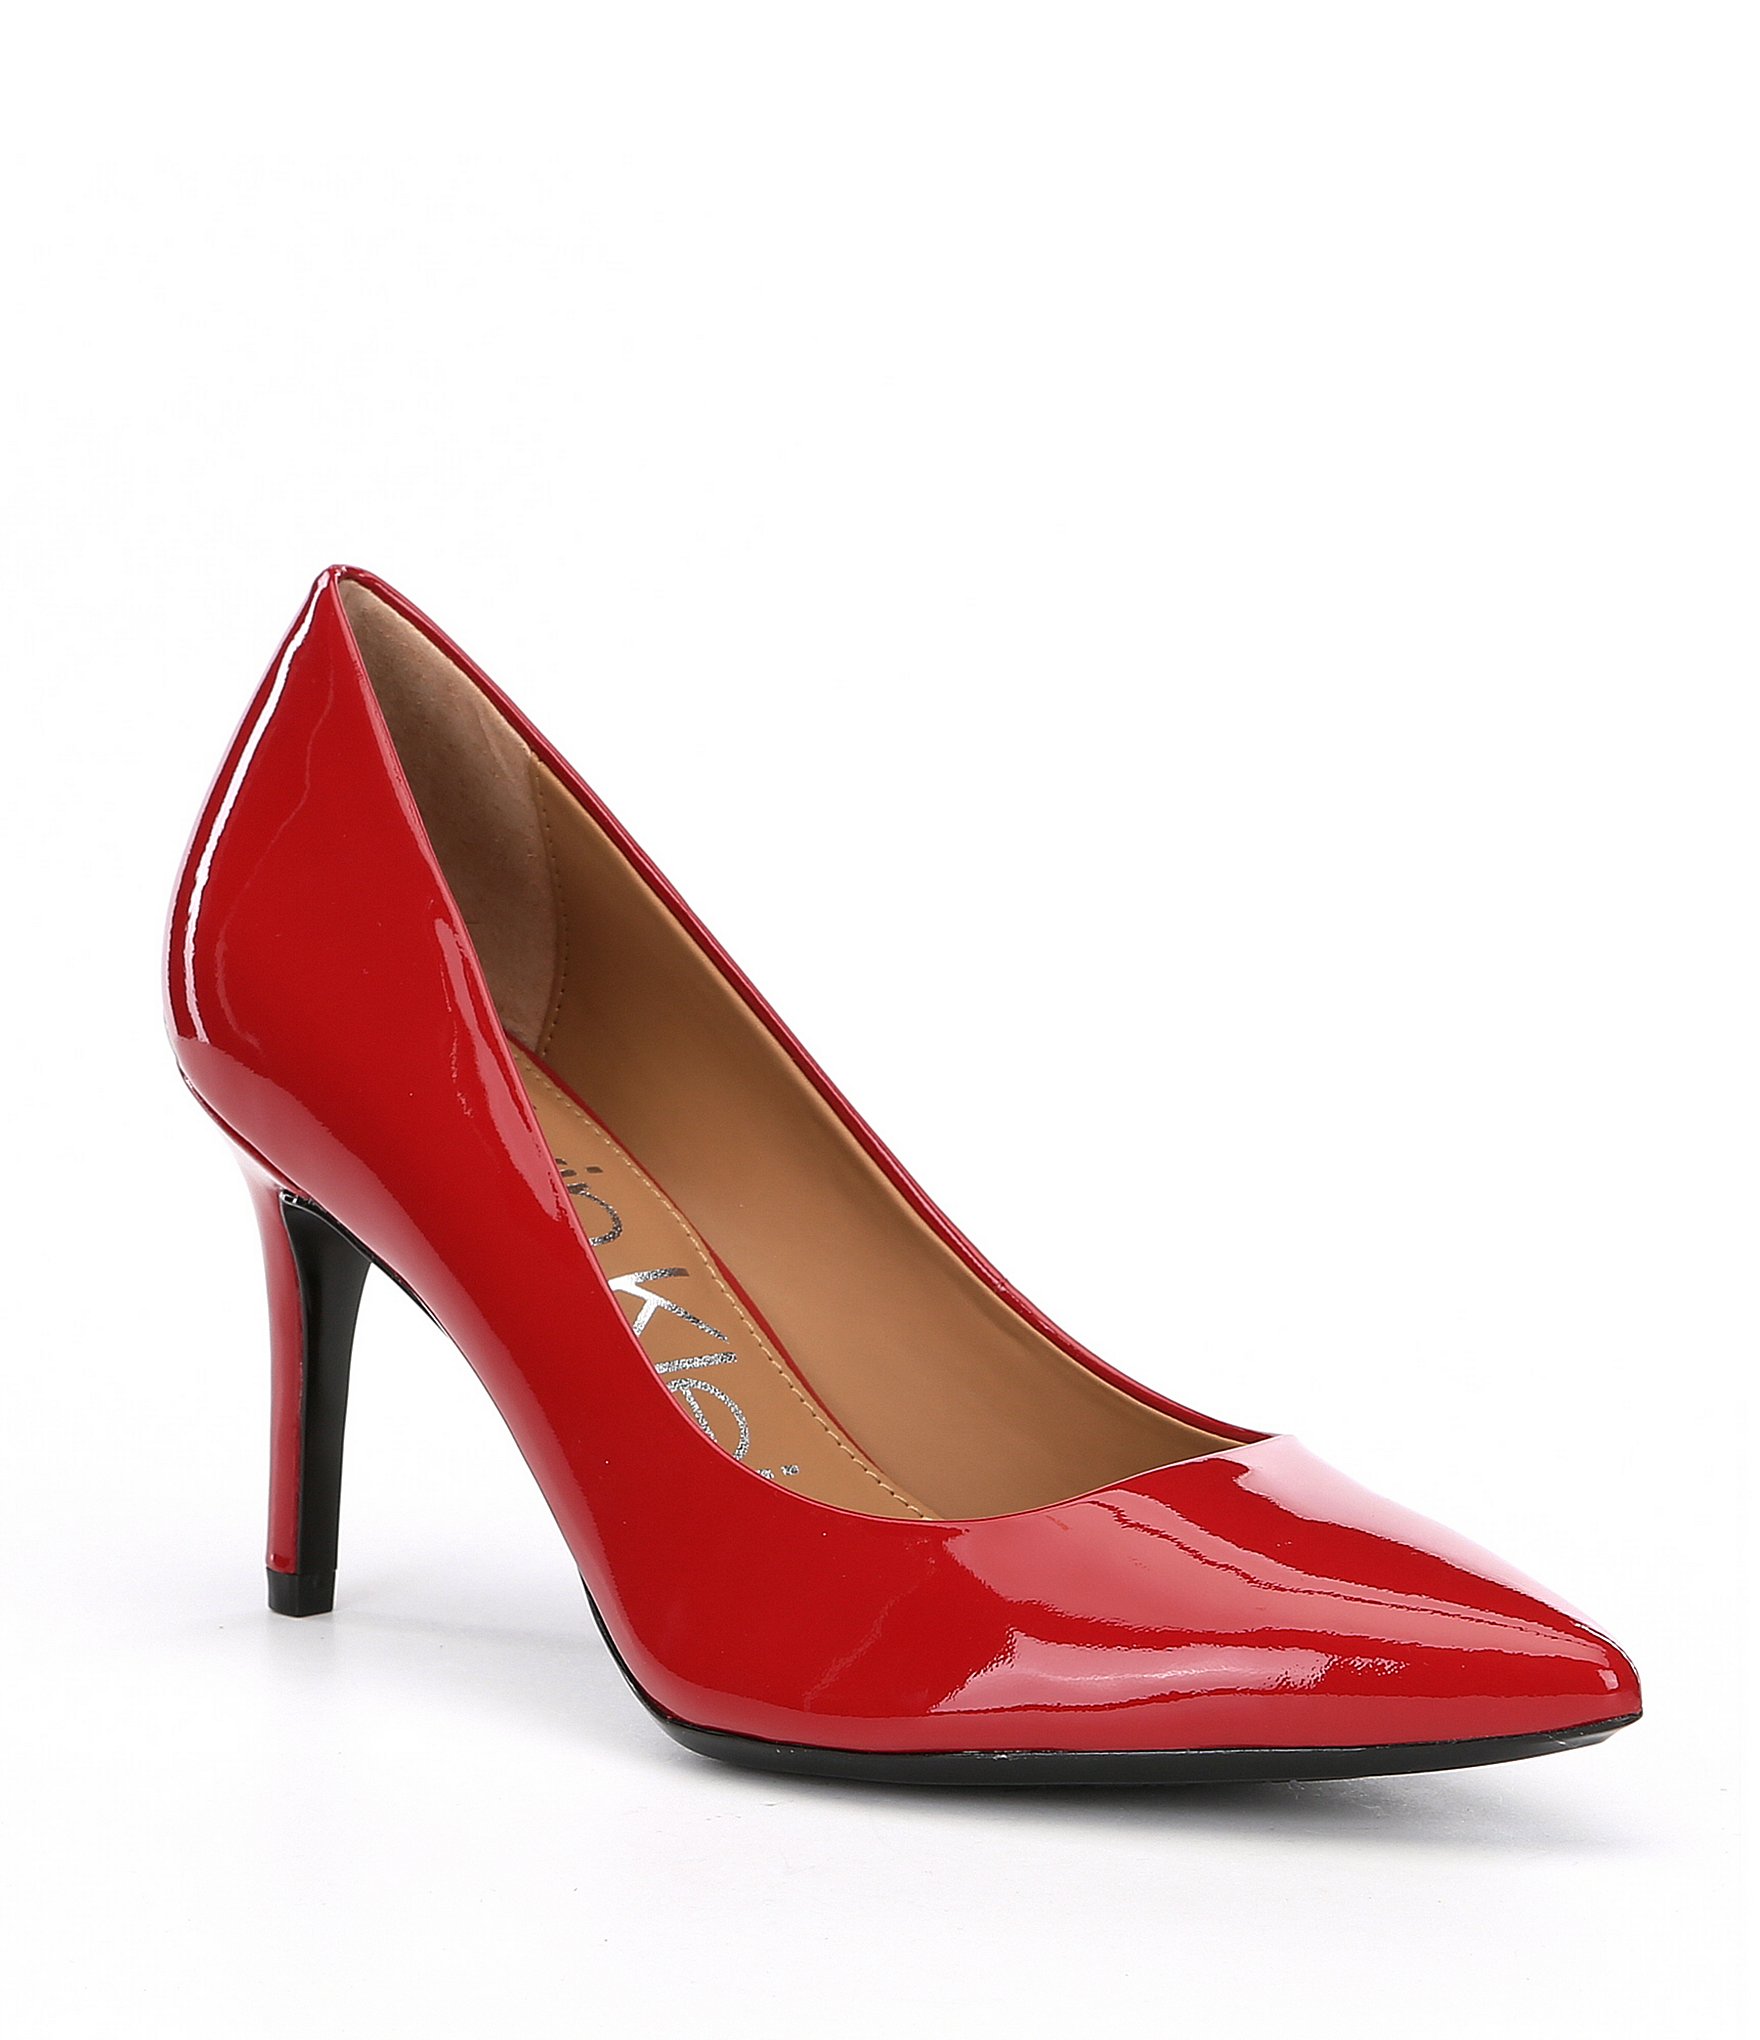 wine red: Shoes for Women, Men & Kids | Dillards.com